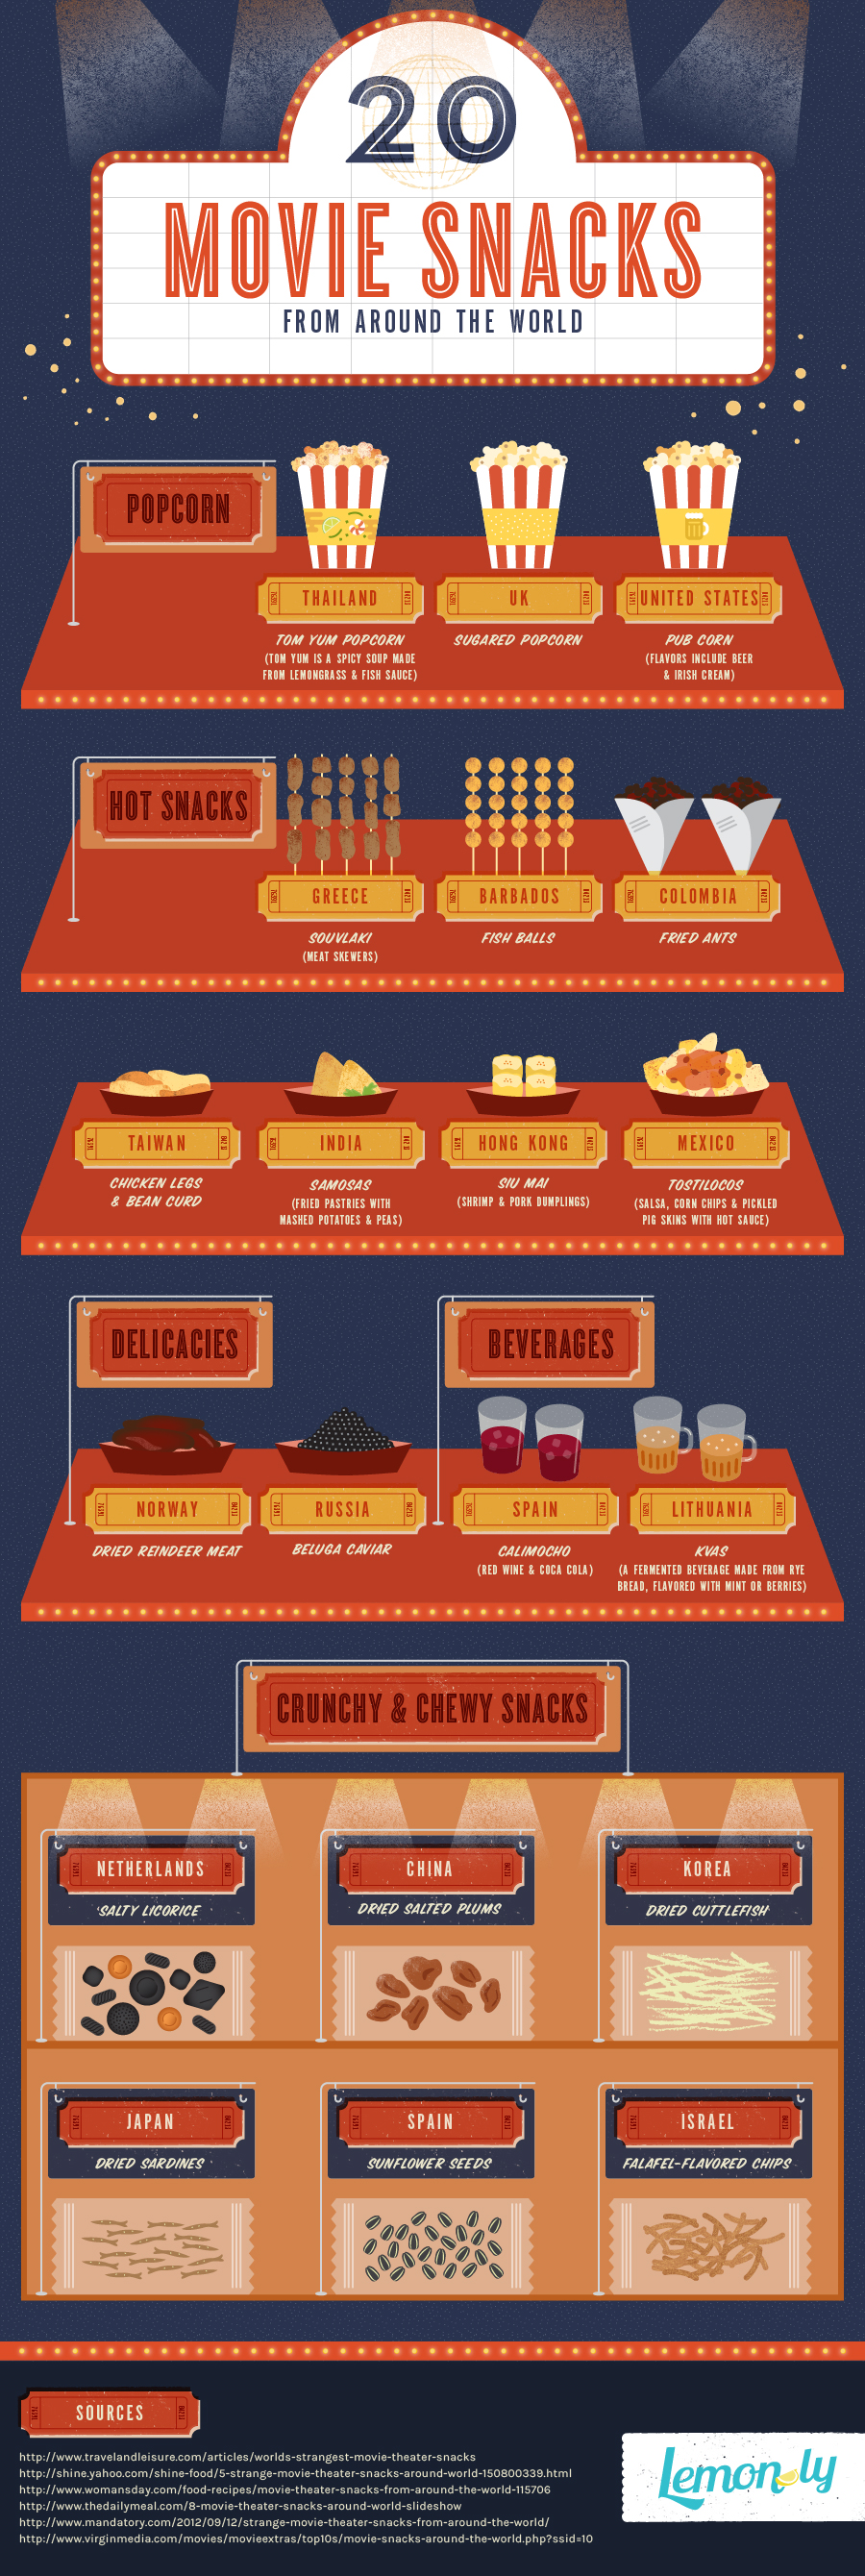 20 Movie Snacks from Around the World - Infographic